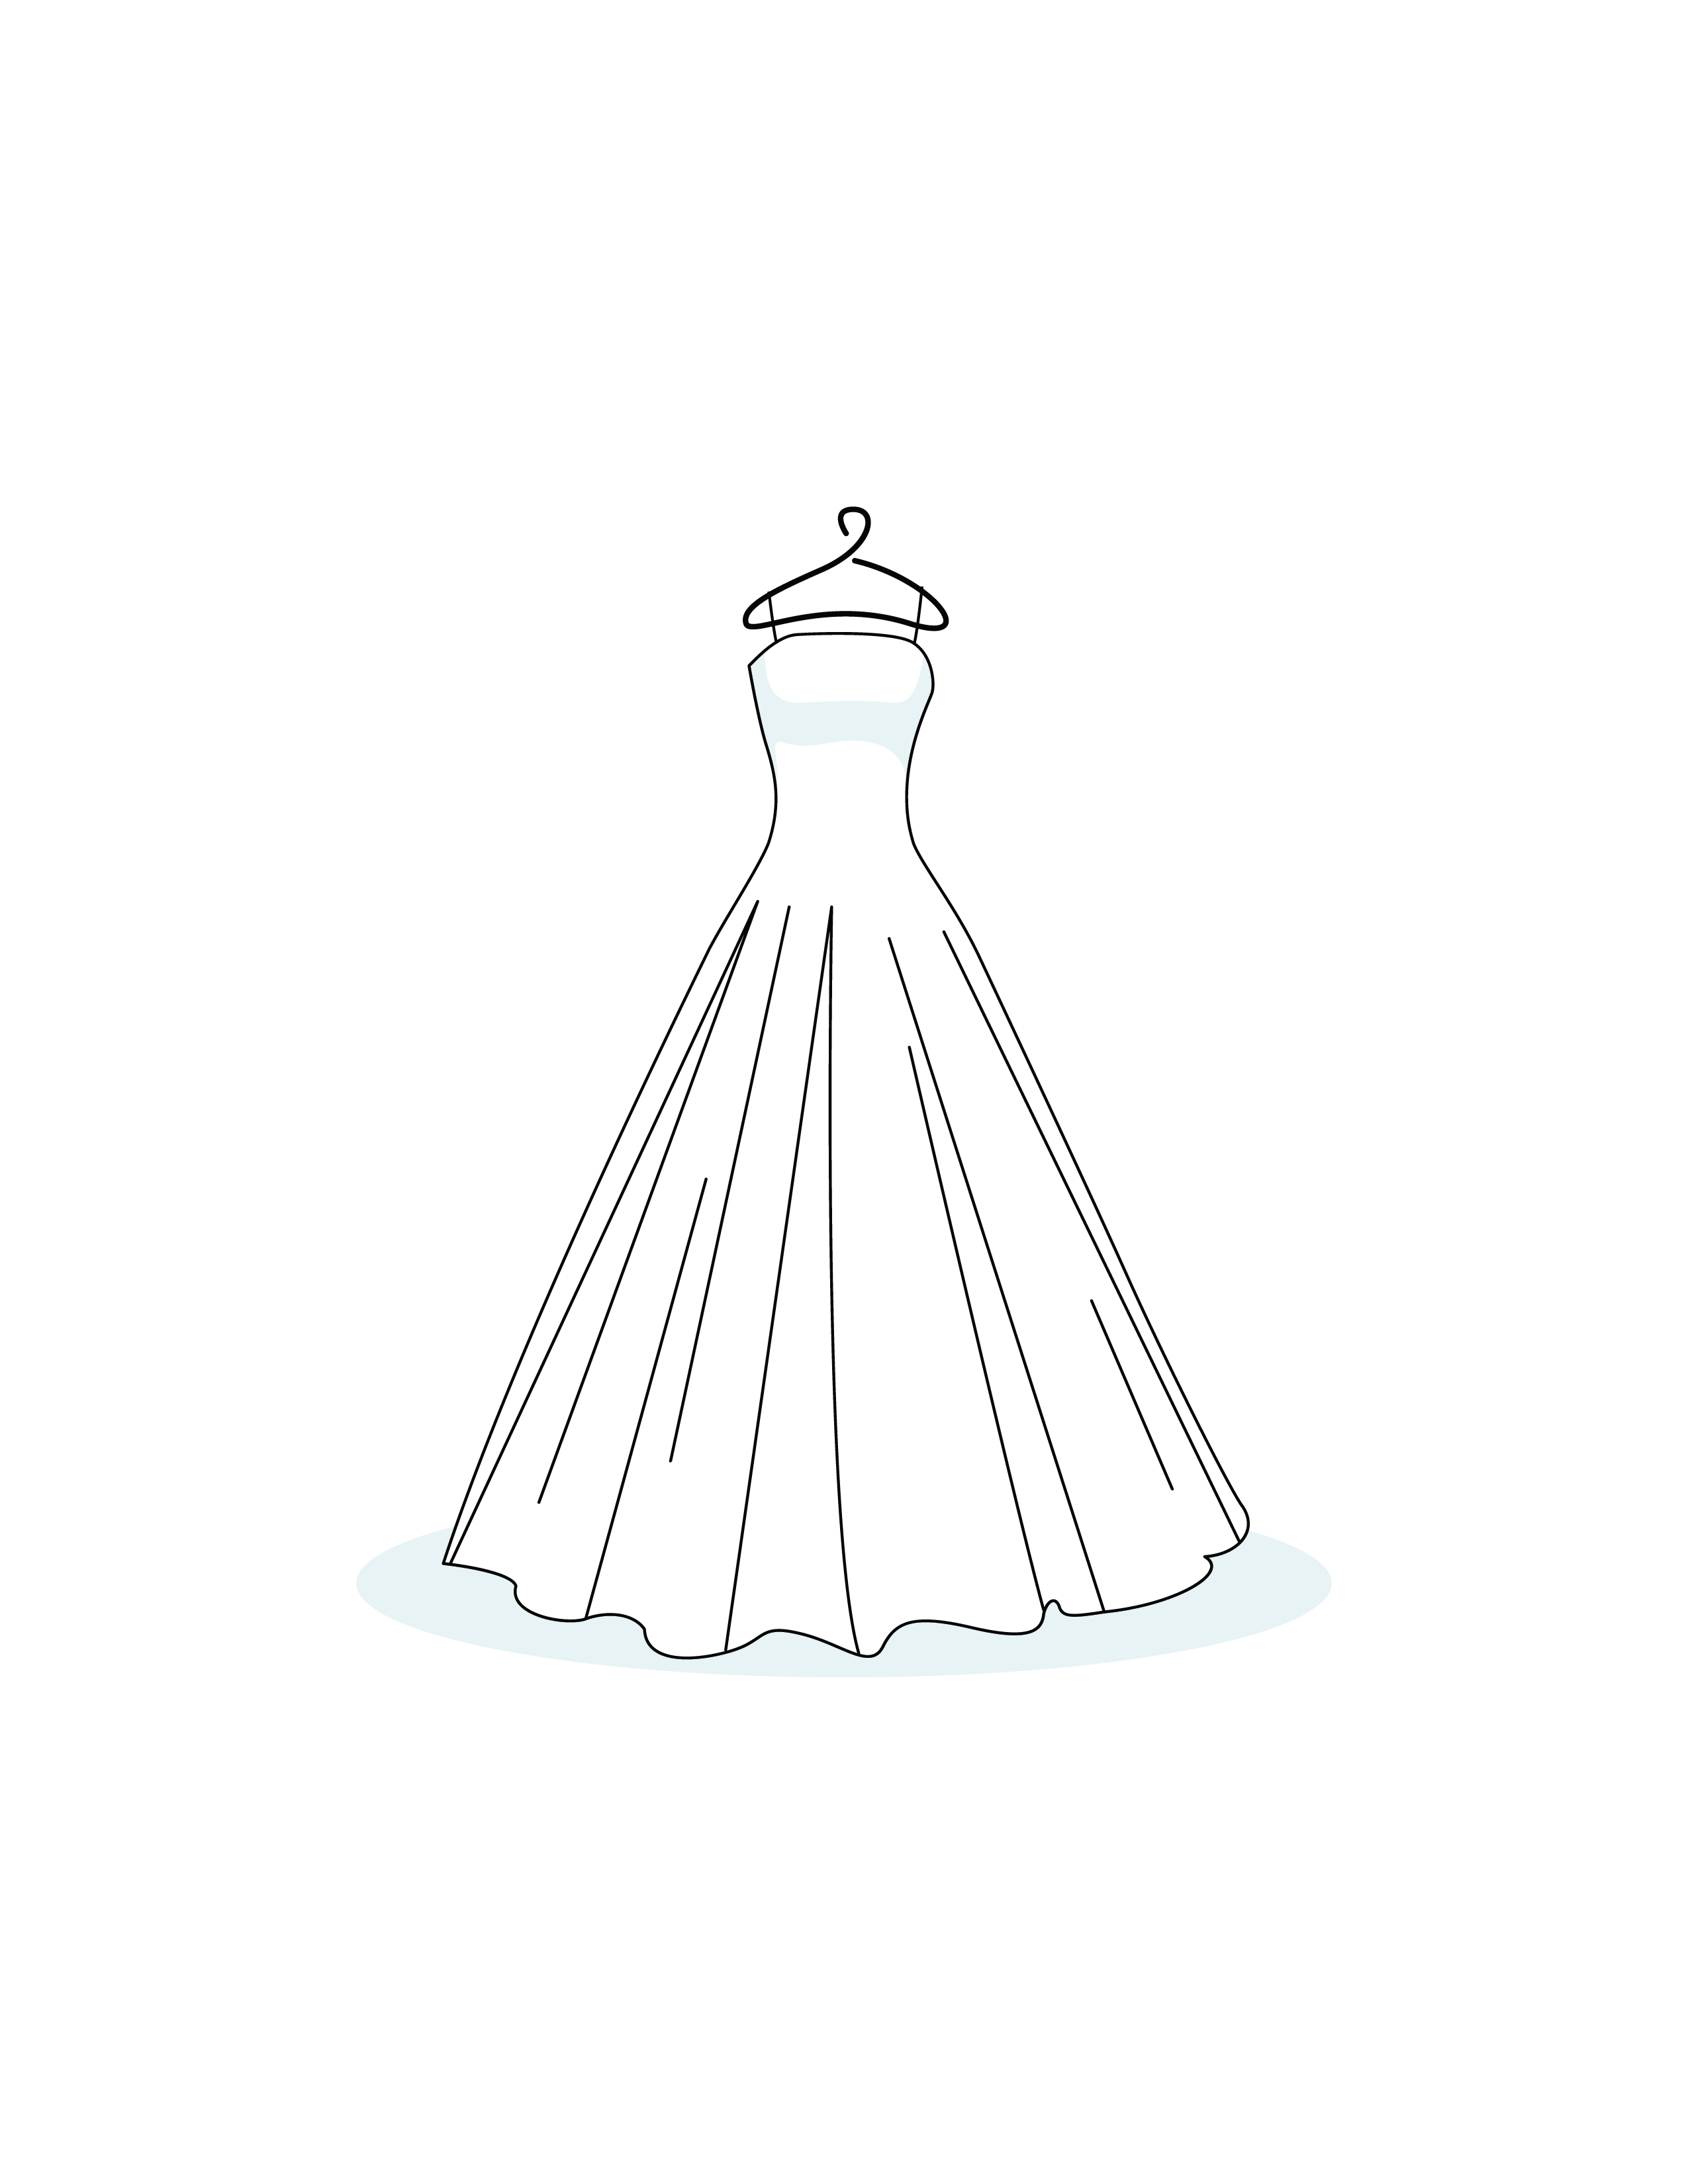 FREE Wedding Dress Template Download in Word, PDF, Illustrator